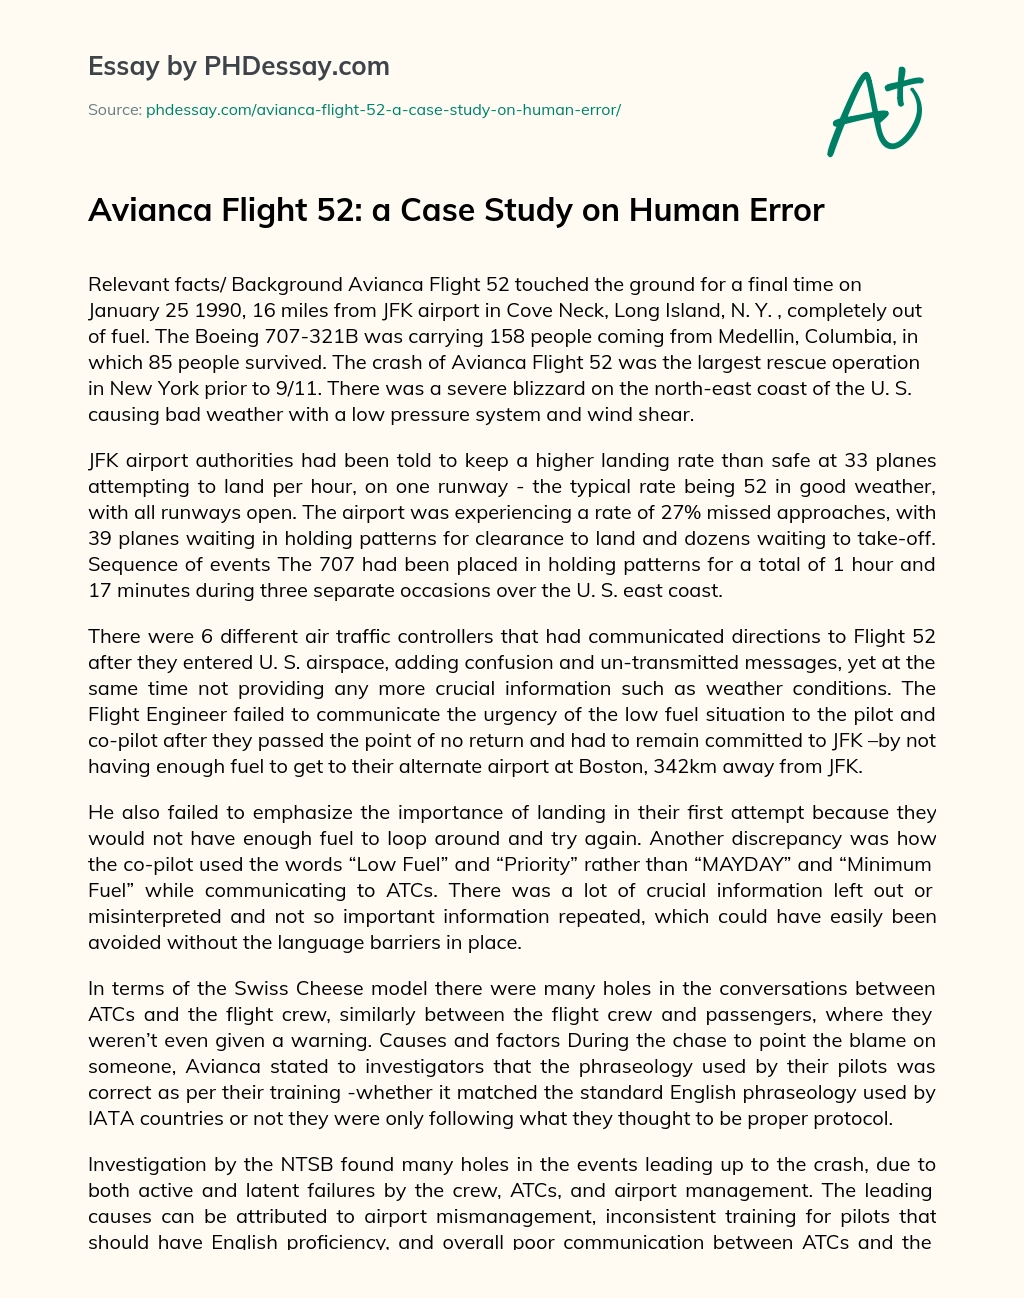 Avianca Flight 52: a Case Study on Human Error essay